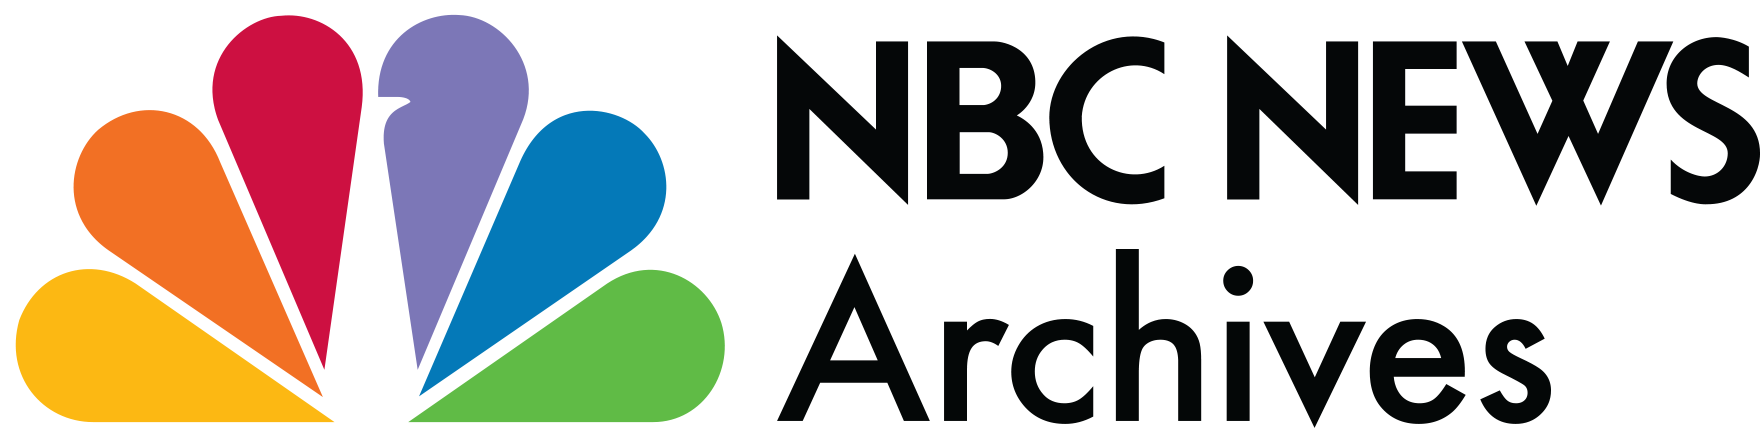 Nbc Logo Png 1760 X 435